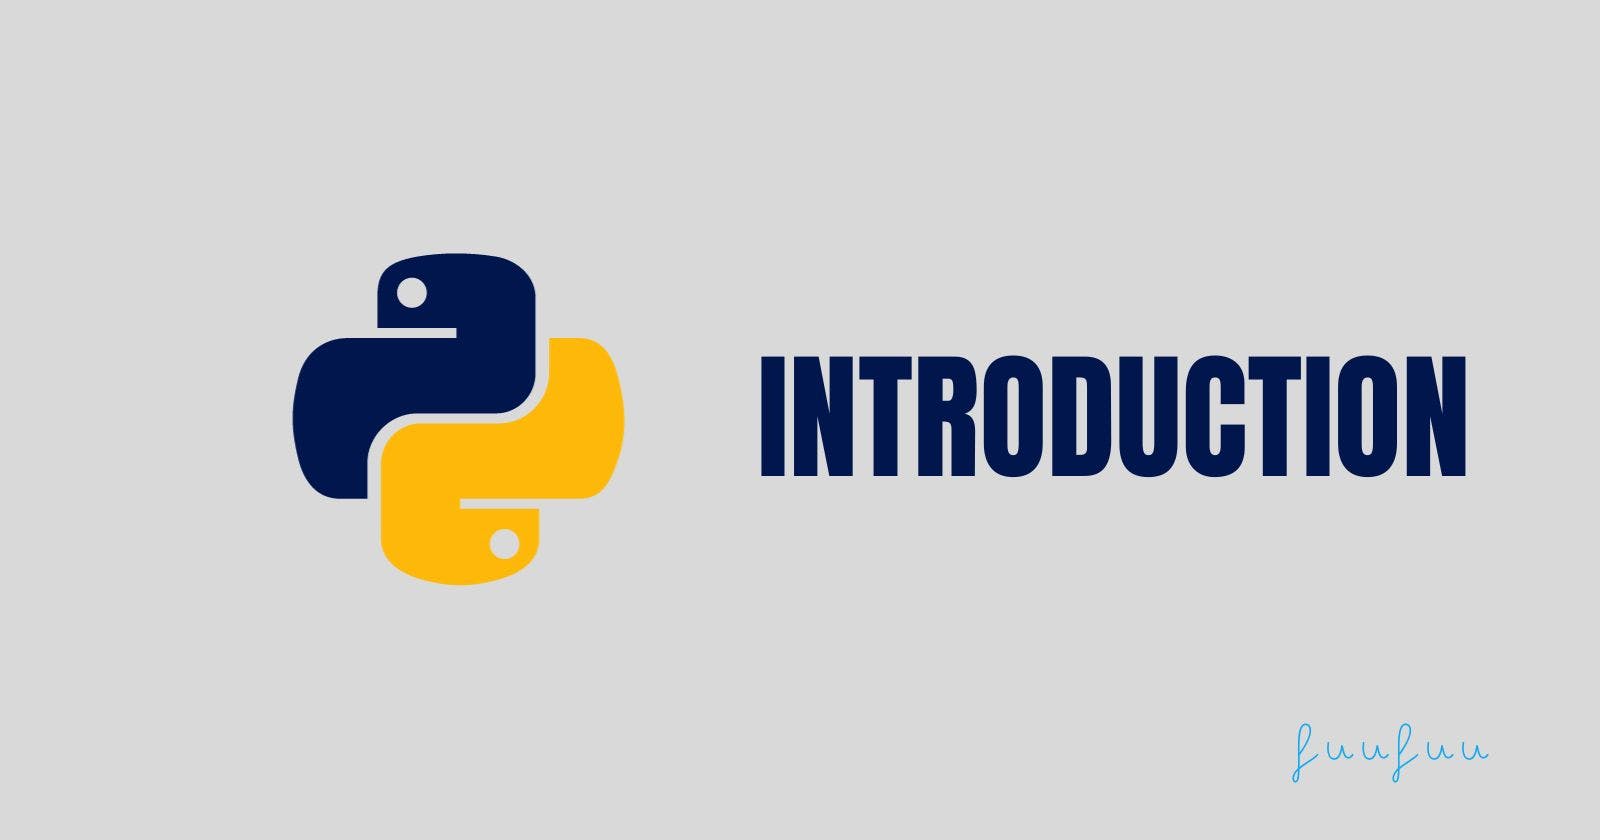 Python - Introduction